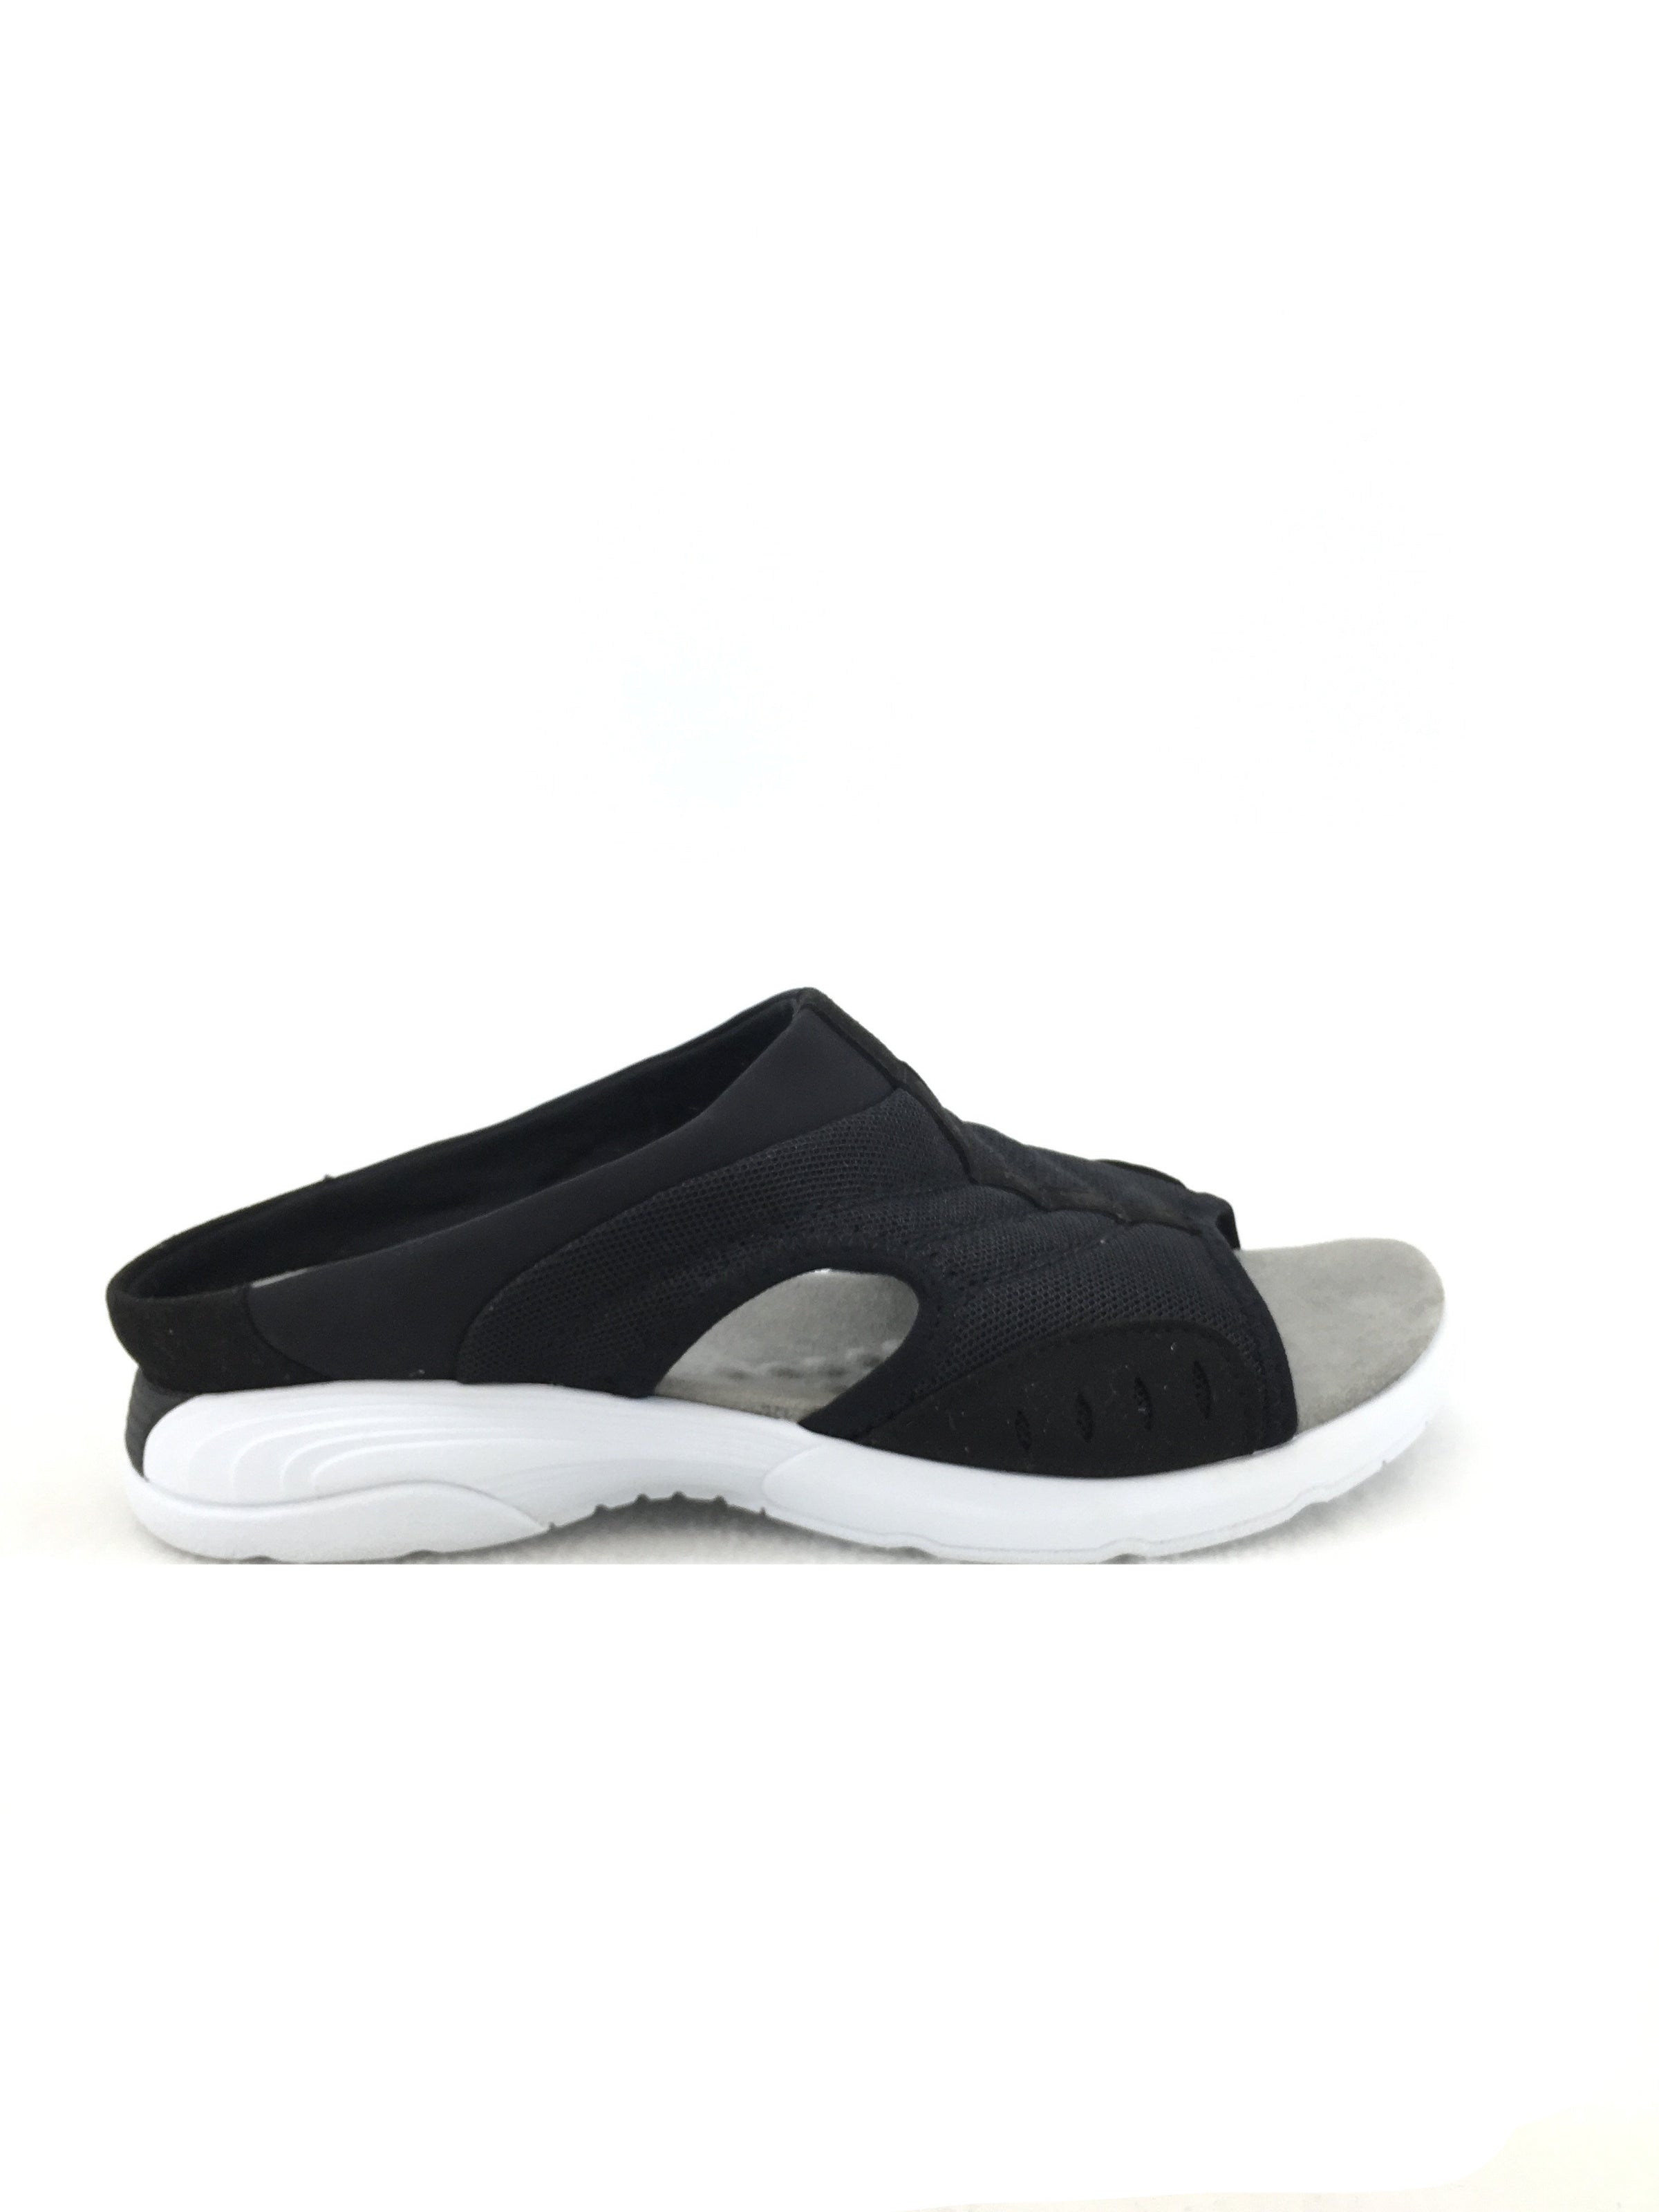 Easy Spirit Comfort Sandals Size 6.5W